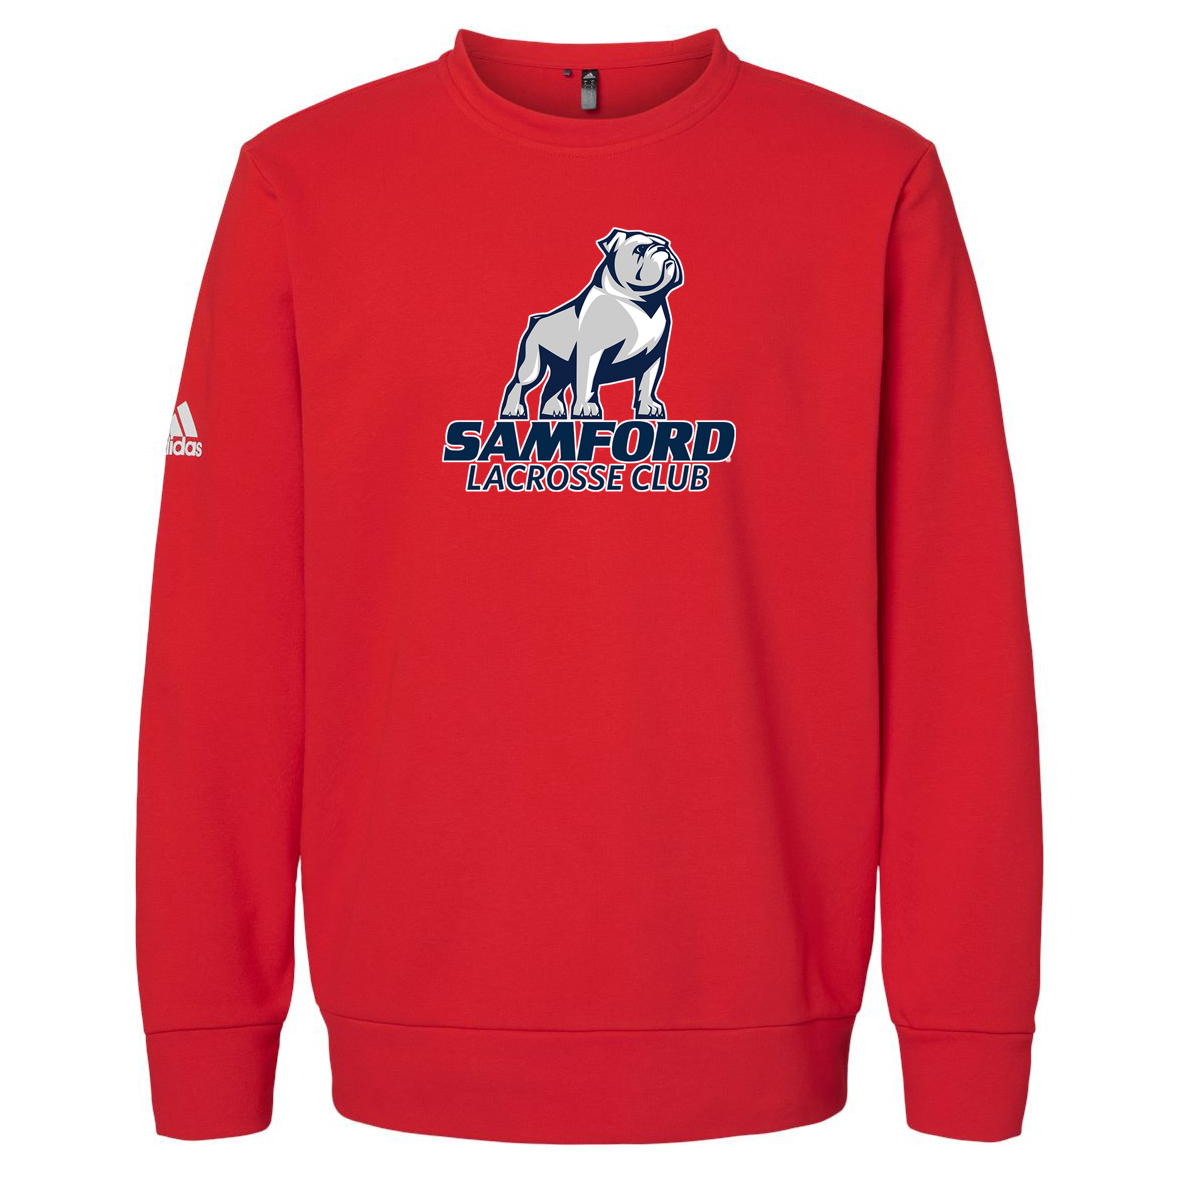 Samford University Lacrosse Club Adidas Fleece Crewneck Sweatshirt